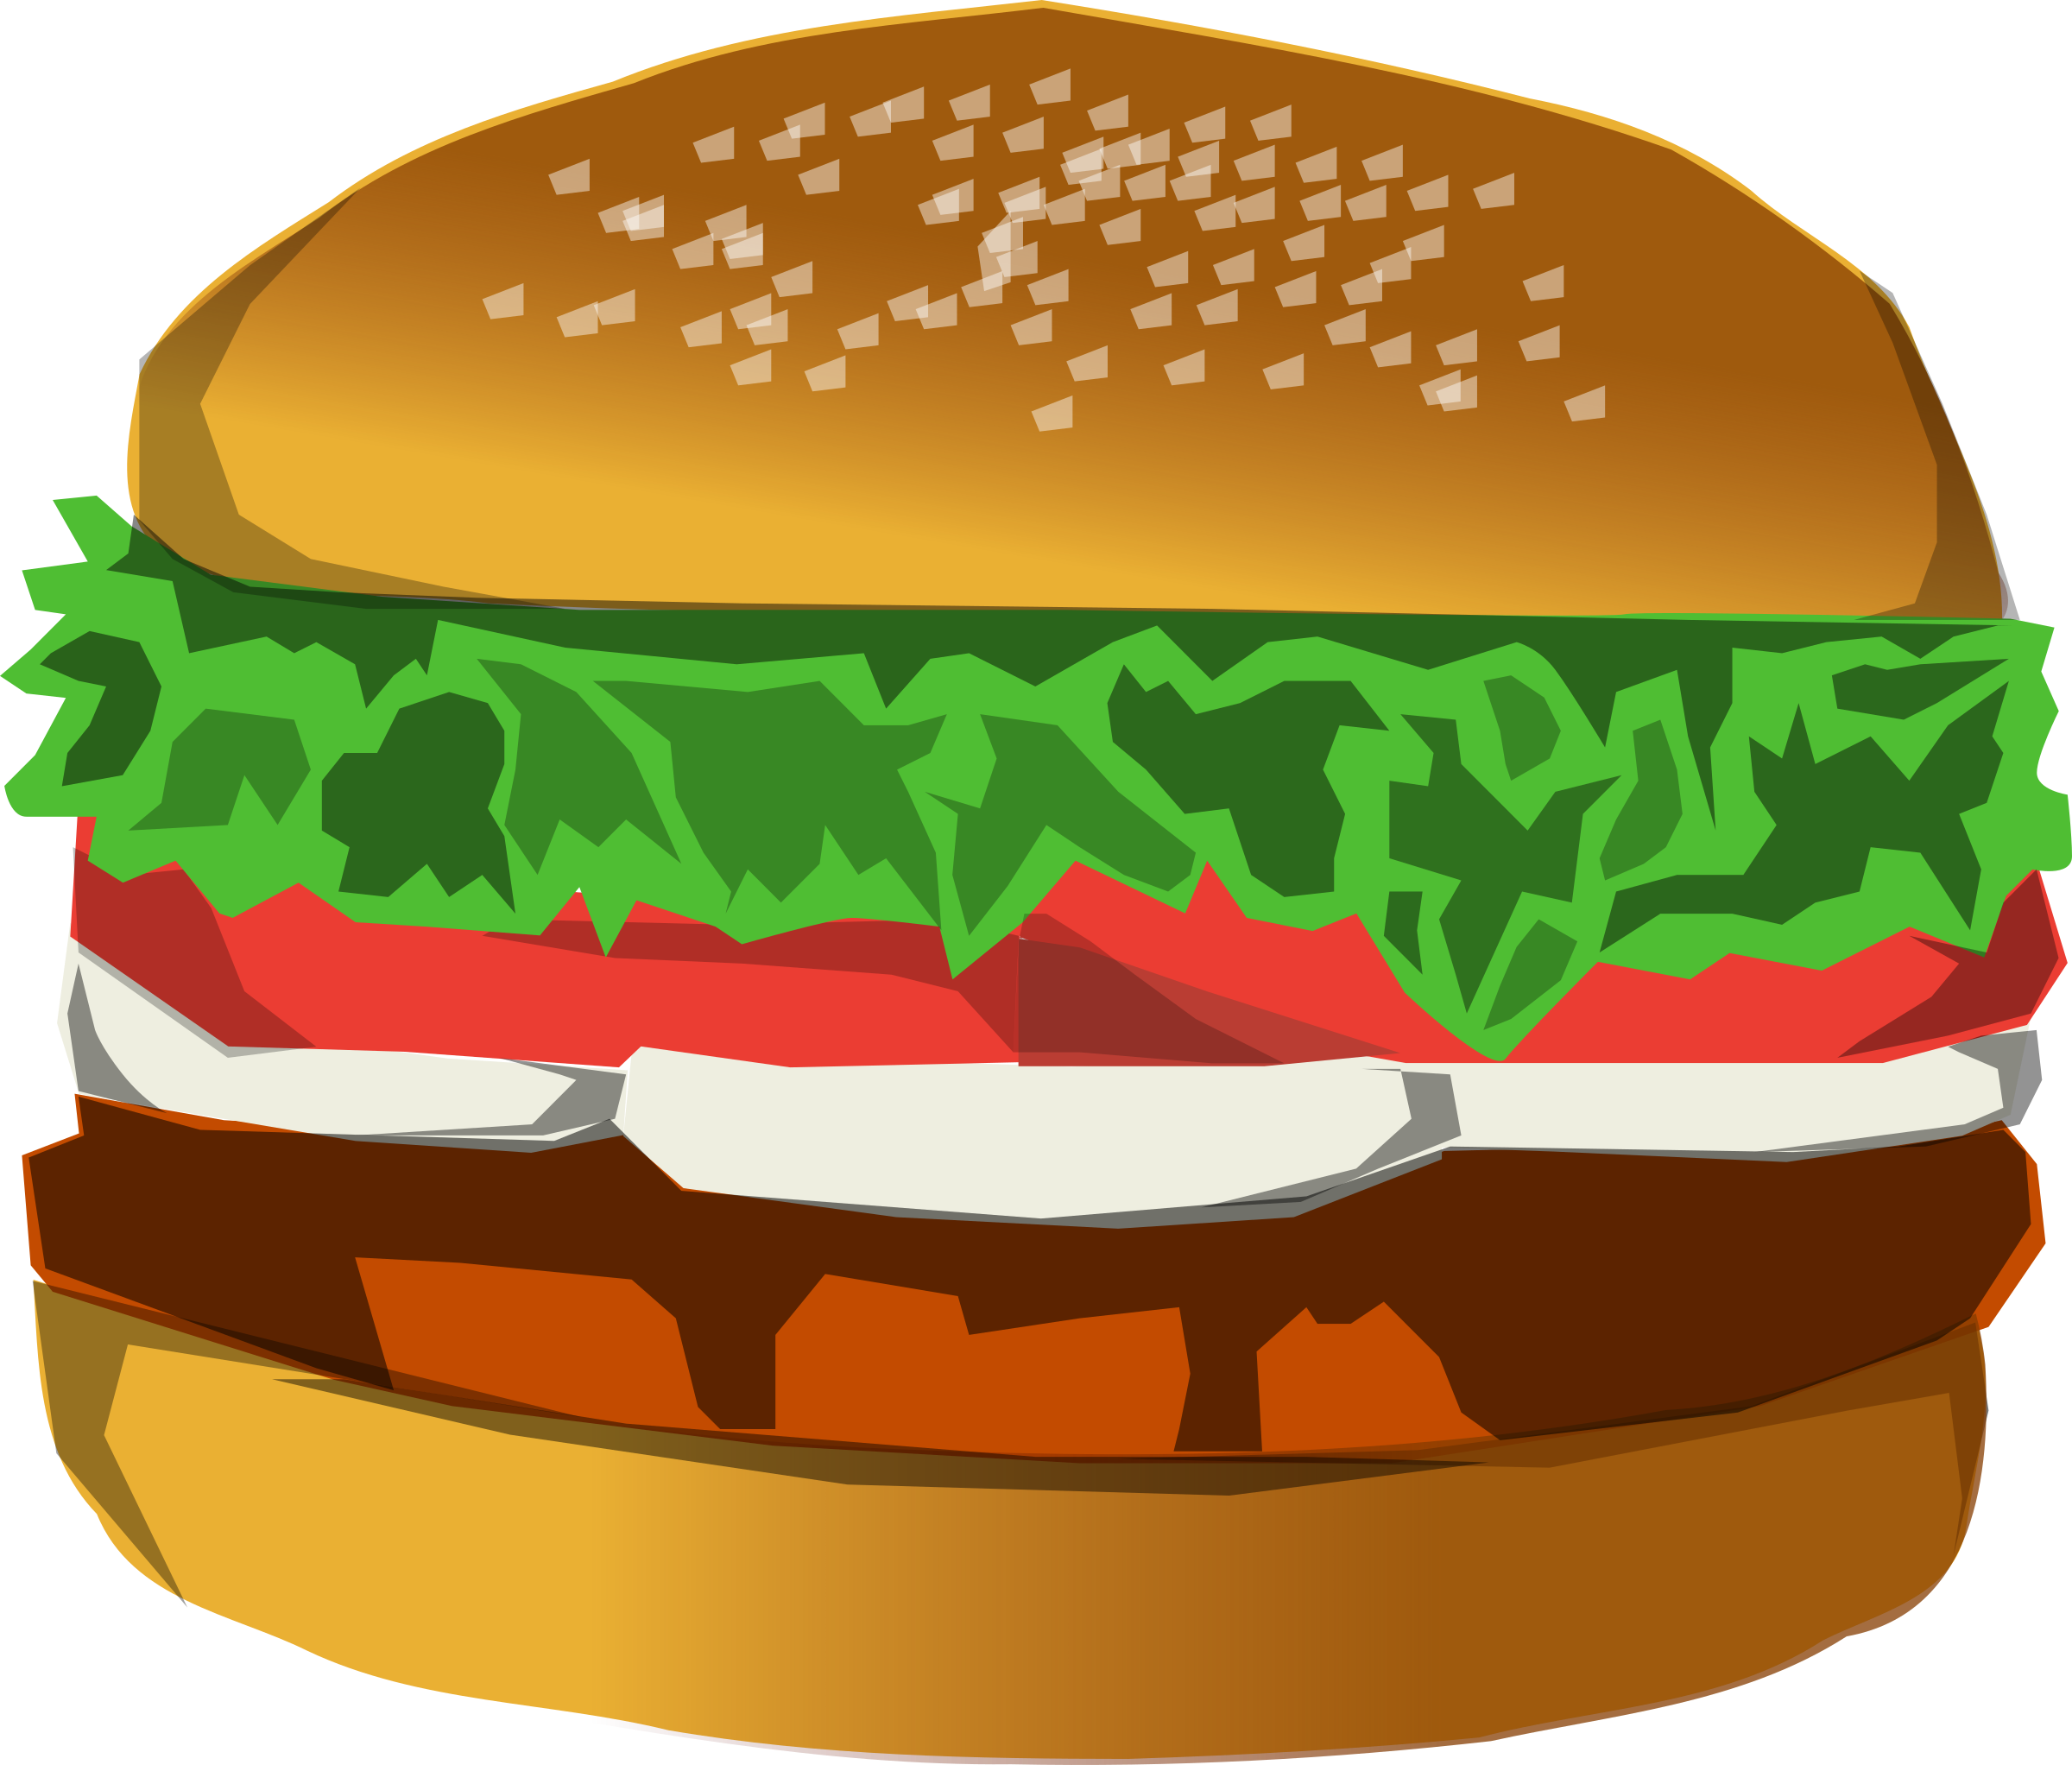 Burger big image png. Clipart food hamburger